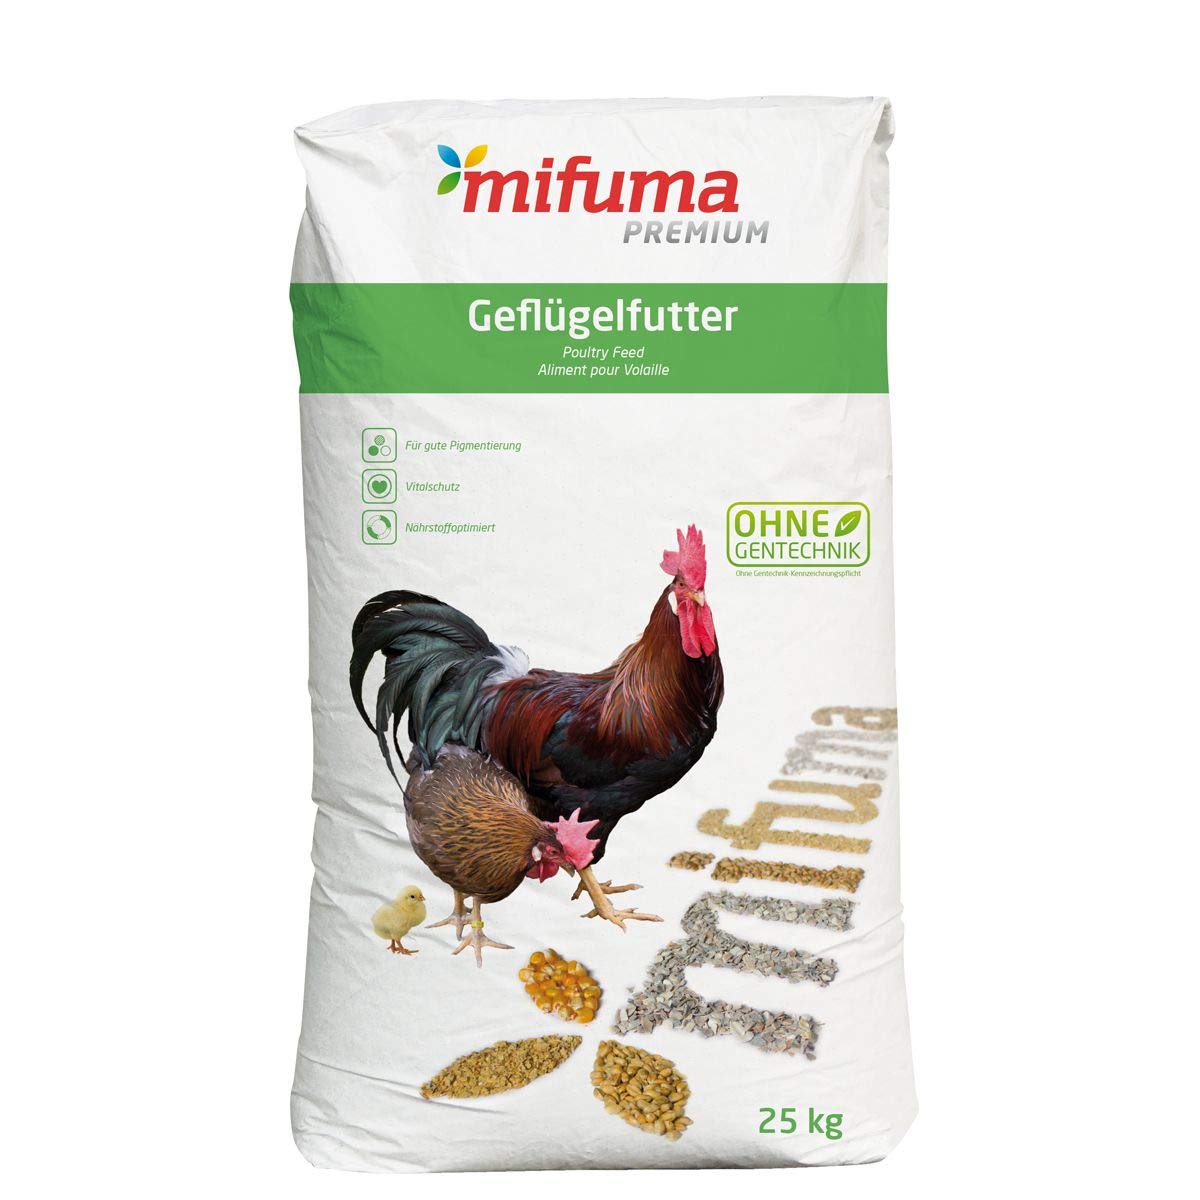 Mifuma Geflügelkörner Premium 25 kg mit Anisöl Hühnerfutter Wachtelfutter Entenfutter Putenfutter